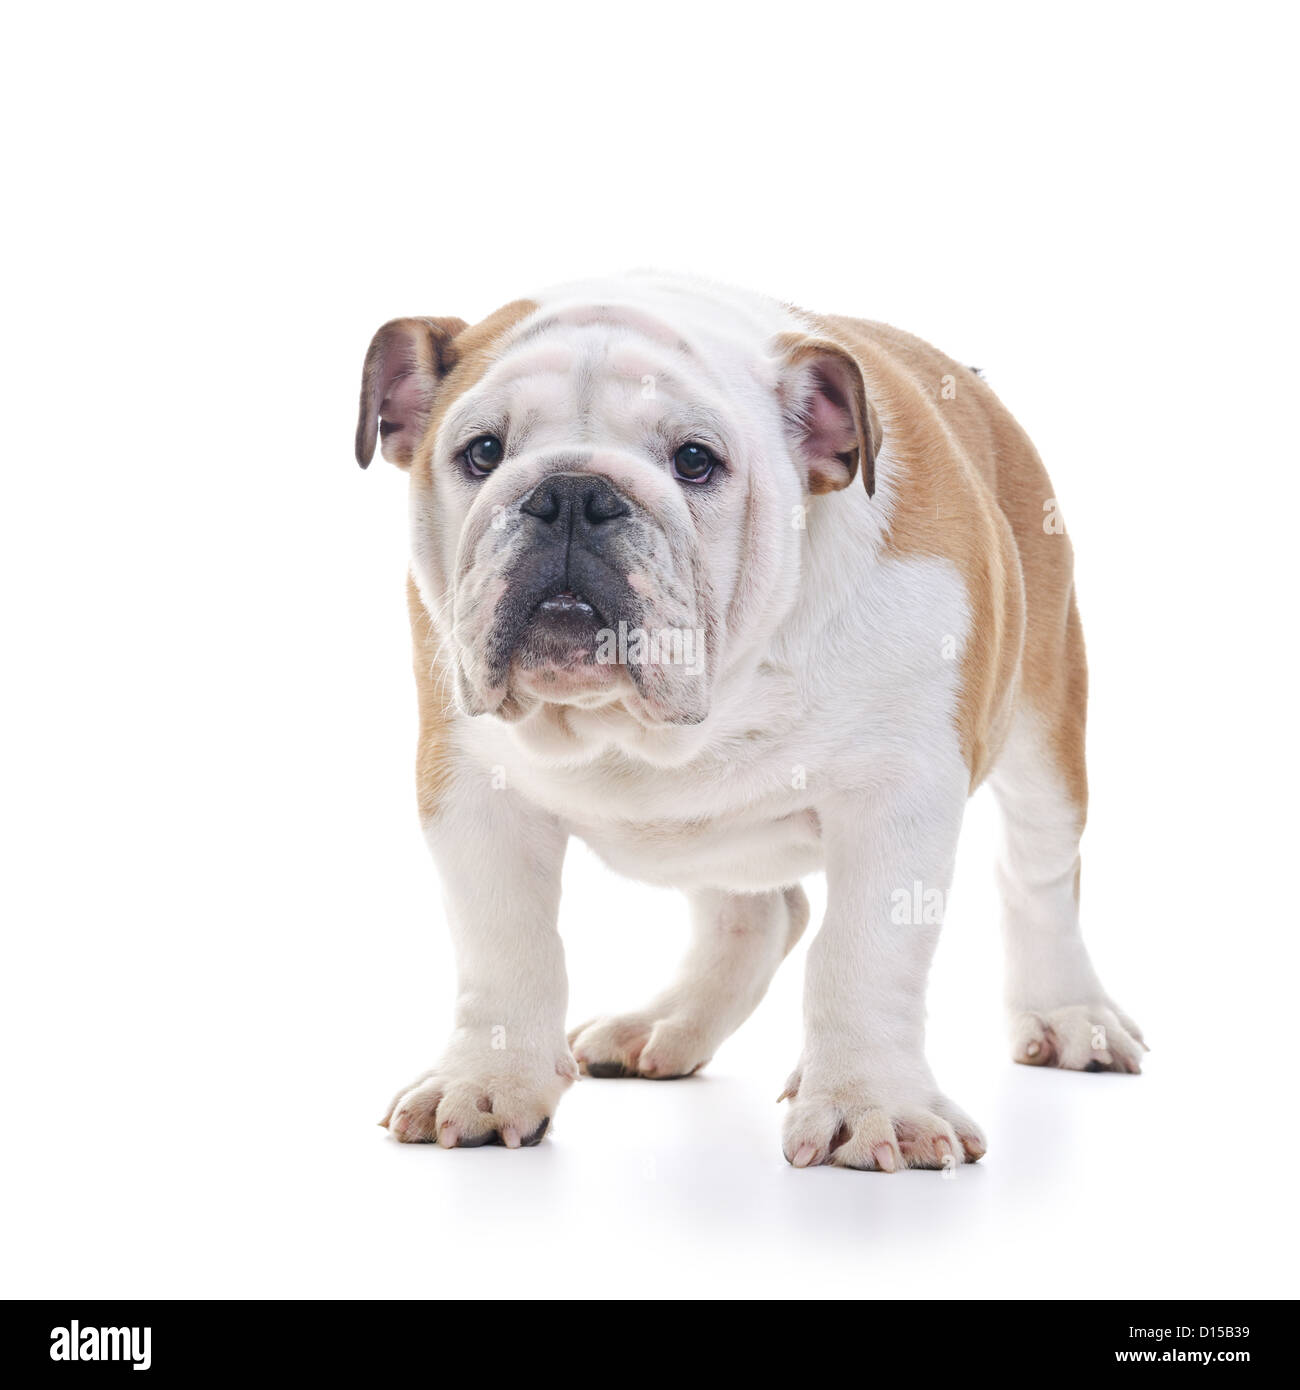 English bulldog standing still over white background Stock Photo